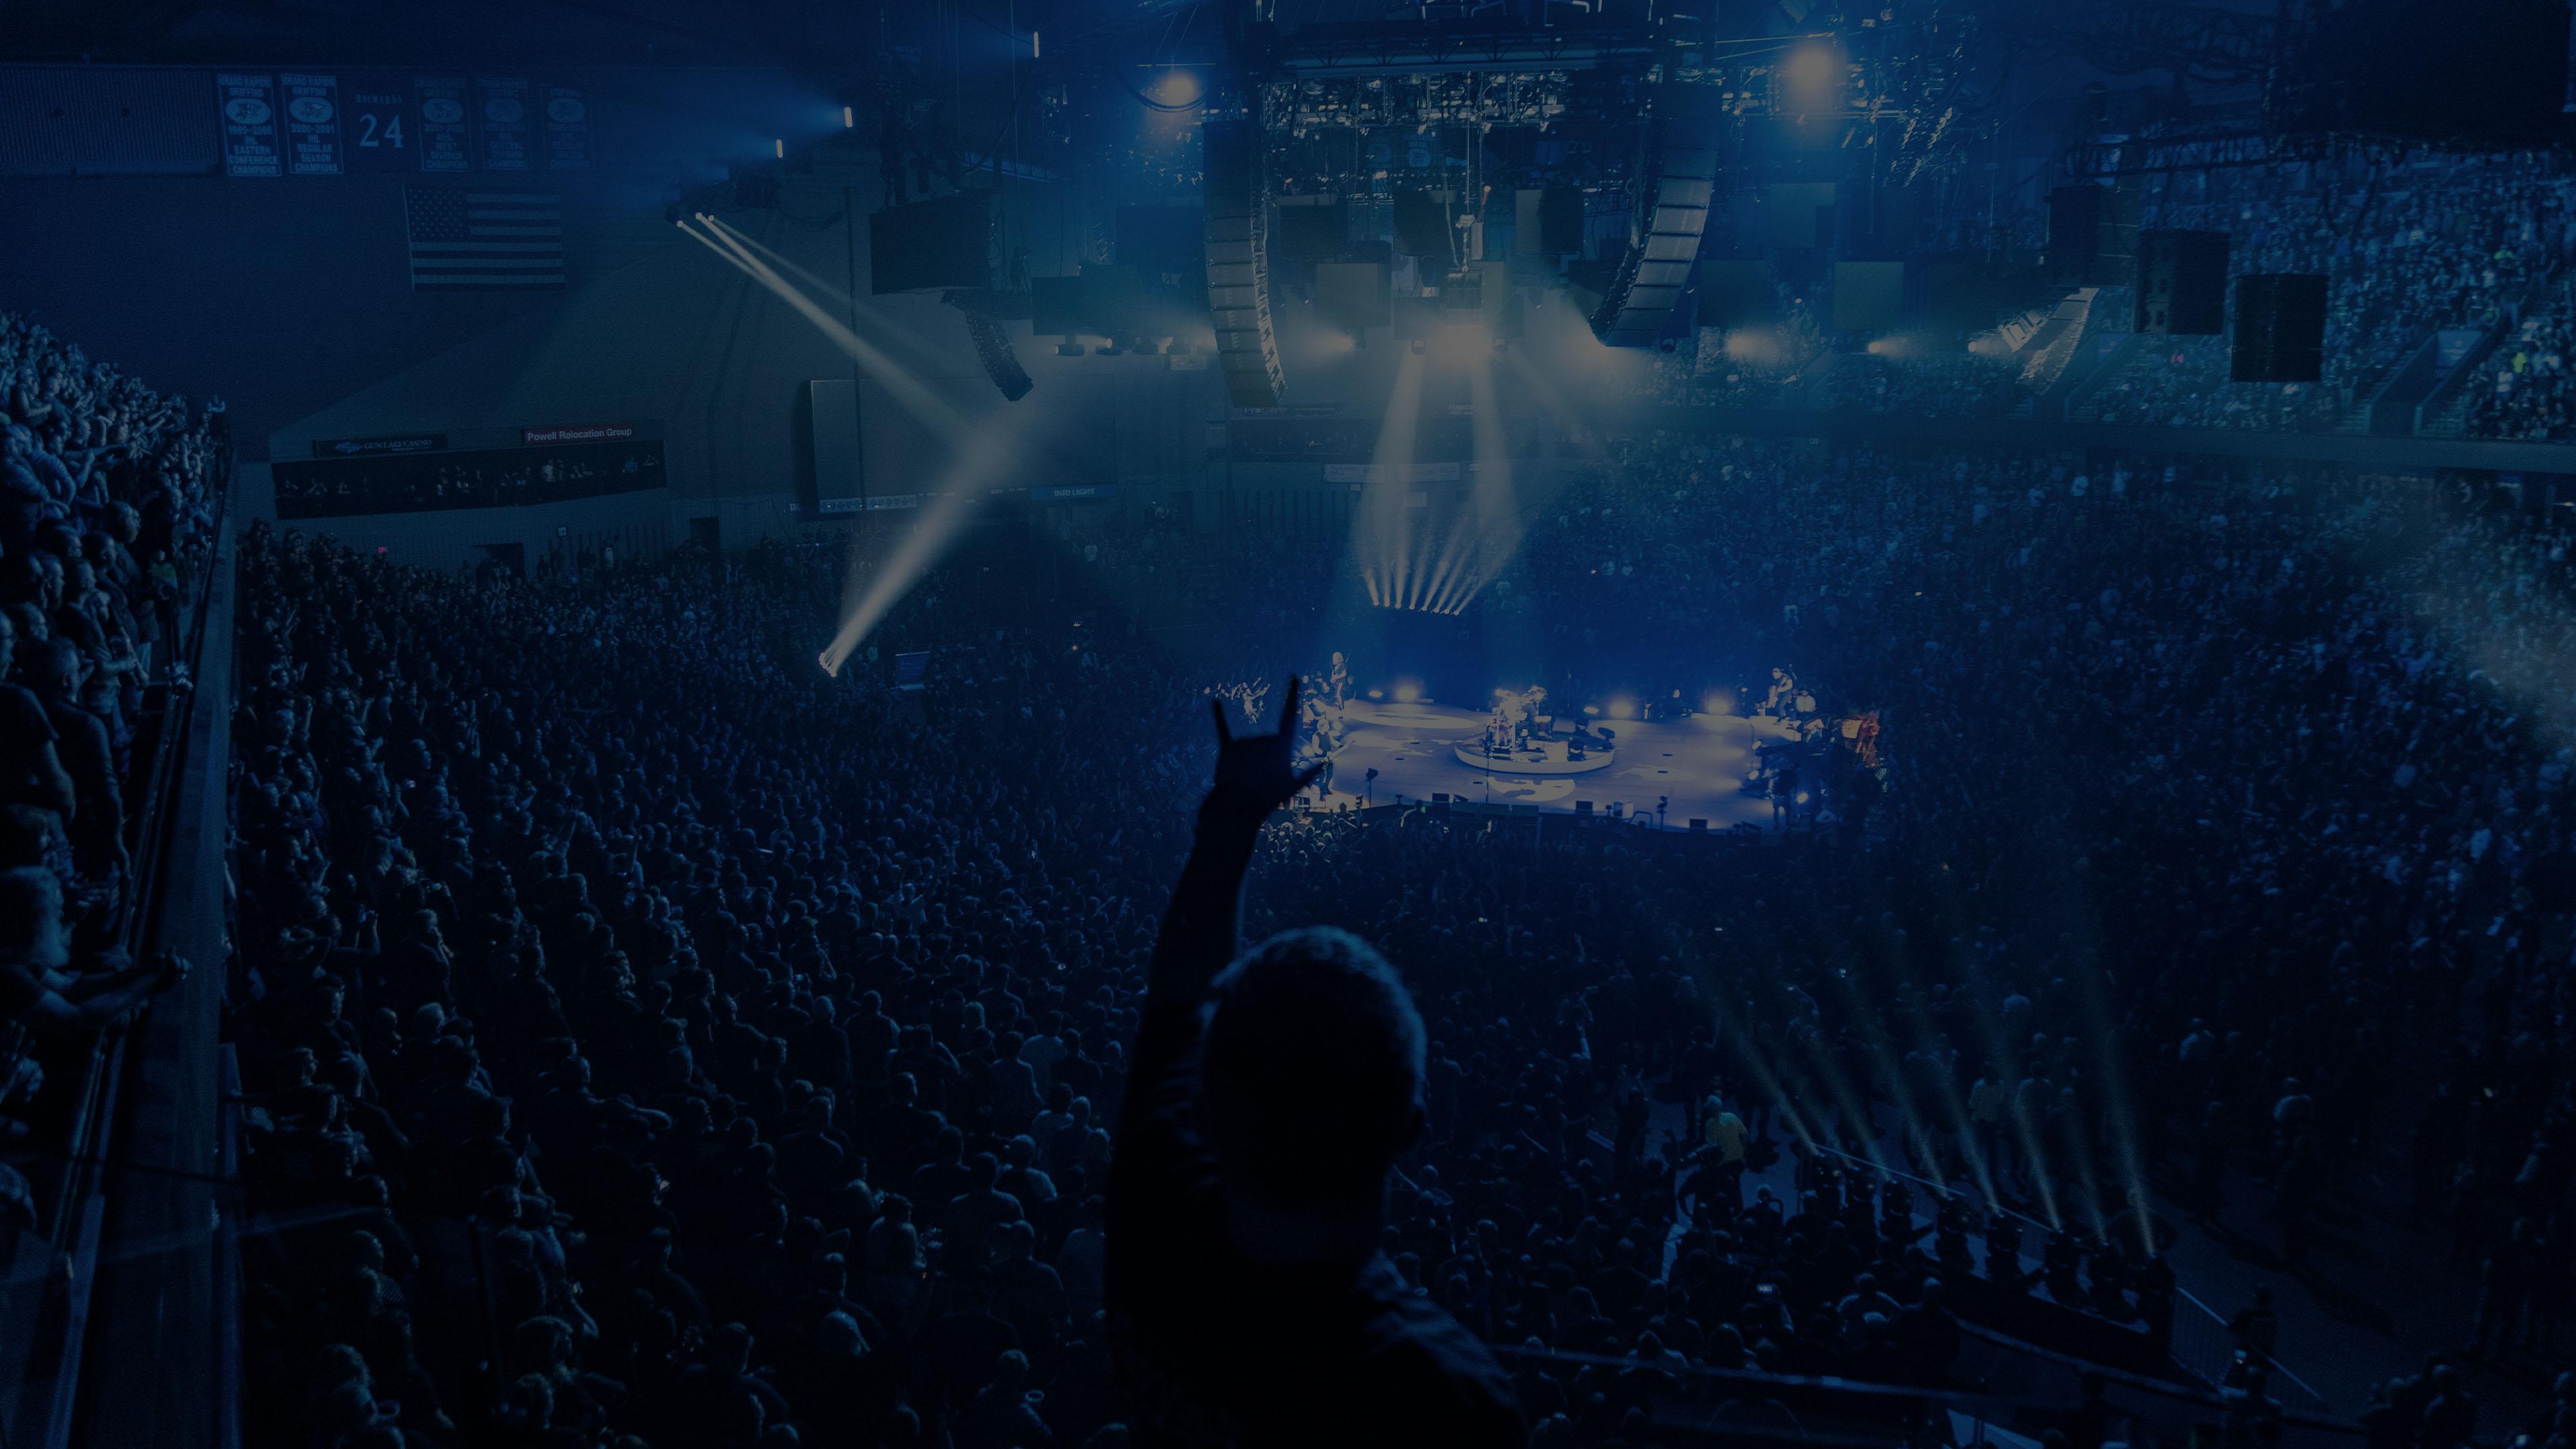 Metallica at Van Andel Arena in Grand Rapids, MI on March 13, 2019